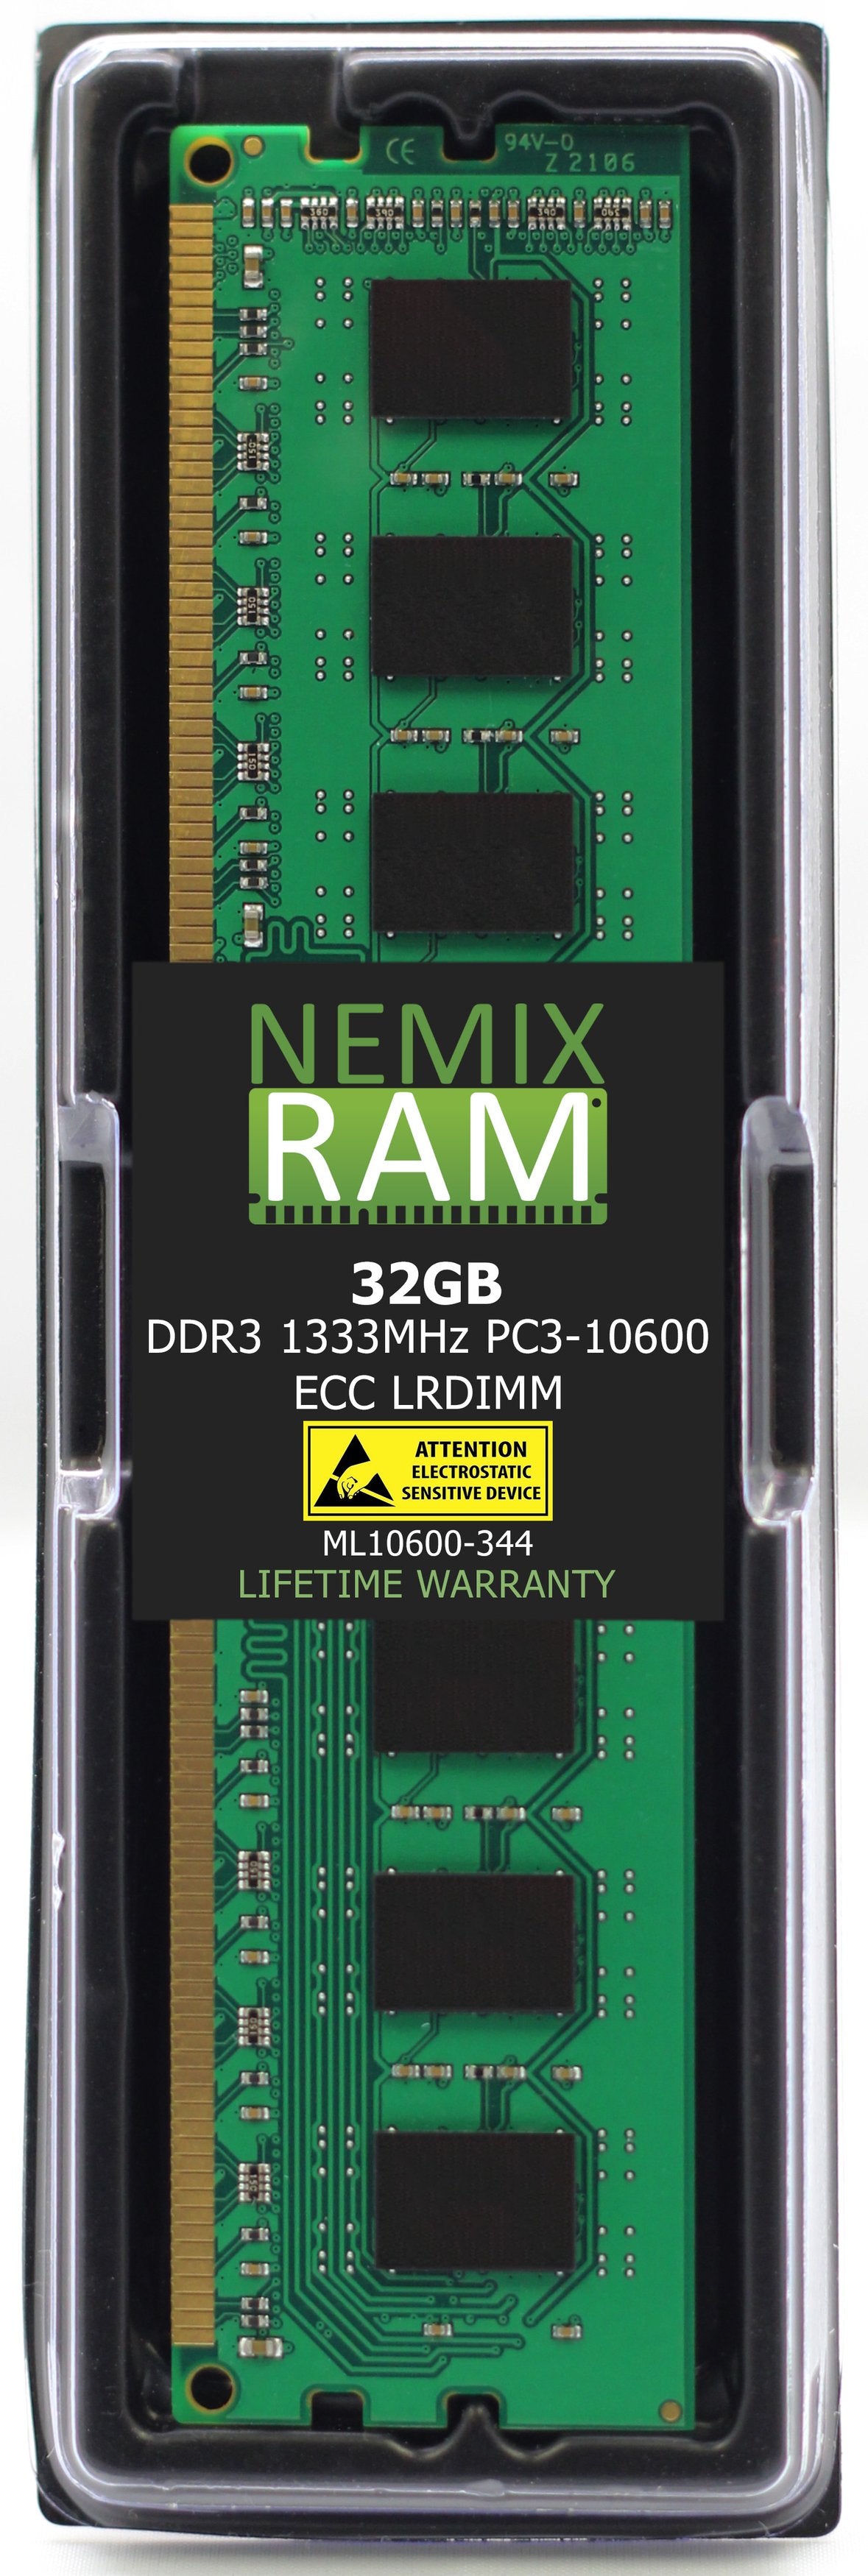 Hynix HMT84GL7BMR4C-H9 32GB DDR3 1333MHZ PC3-10600 LRDIMM Compatible Memory Module